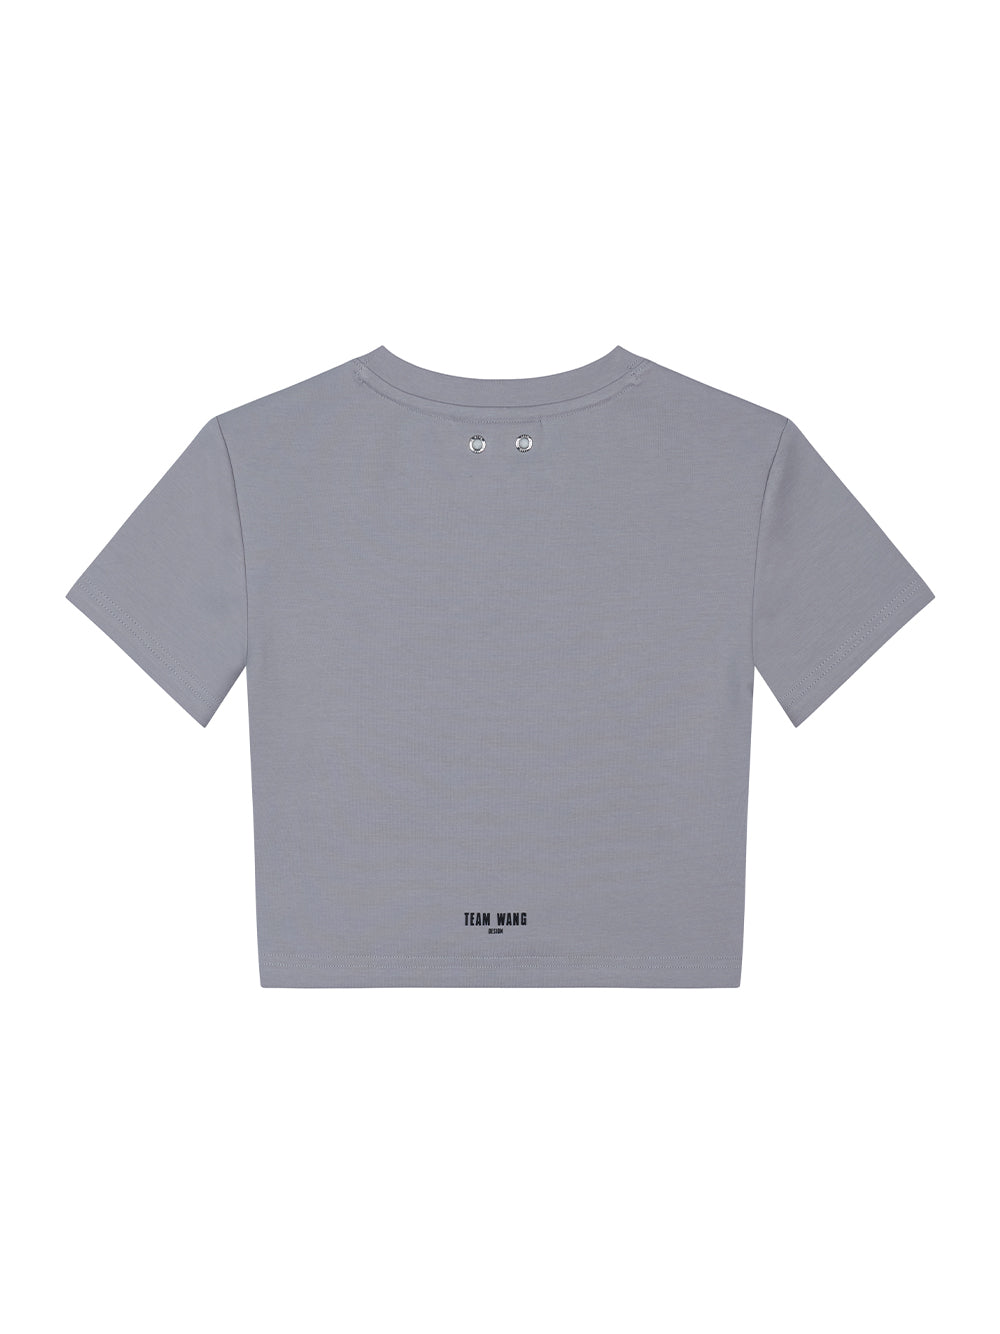 TEAM WANG design x CHUANG ASIA Bodycon Short-Sleeved T-Shirt (Grey)